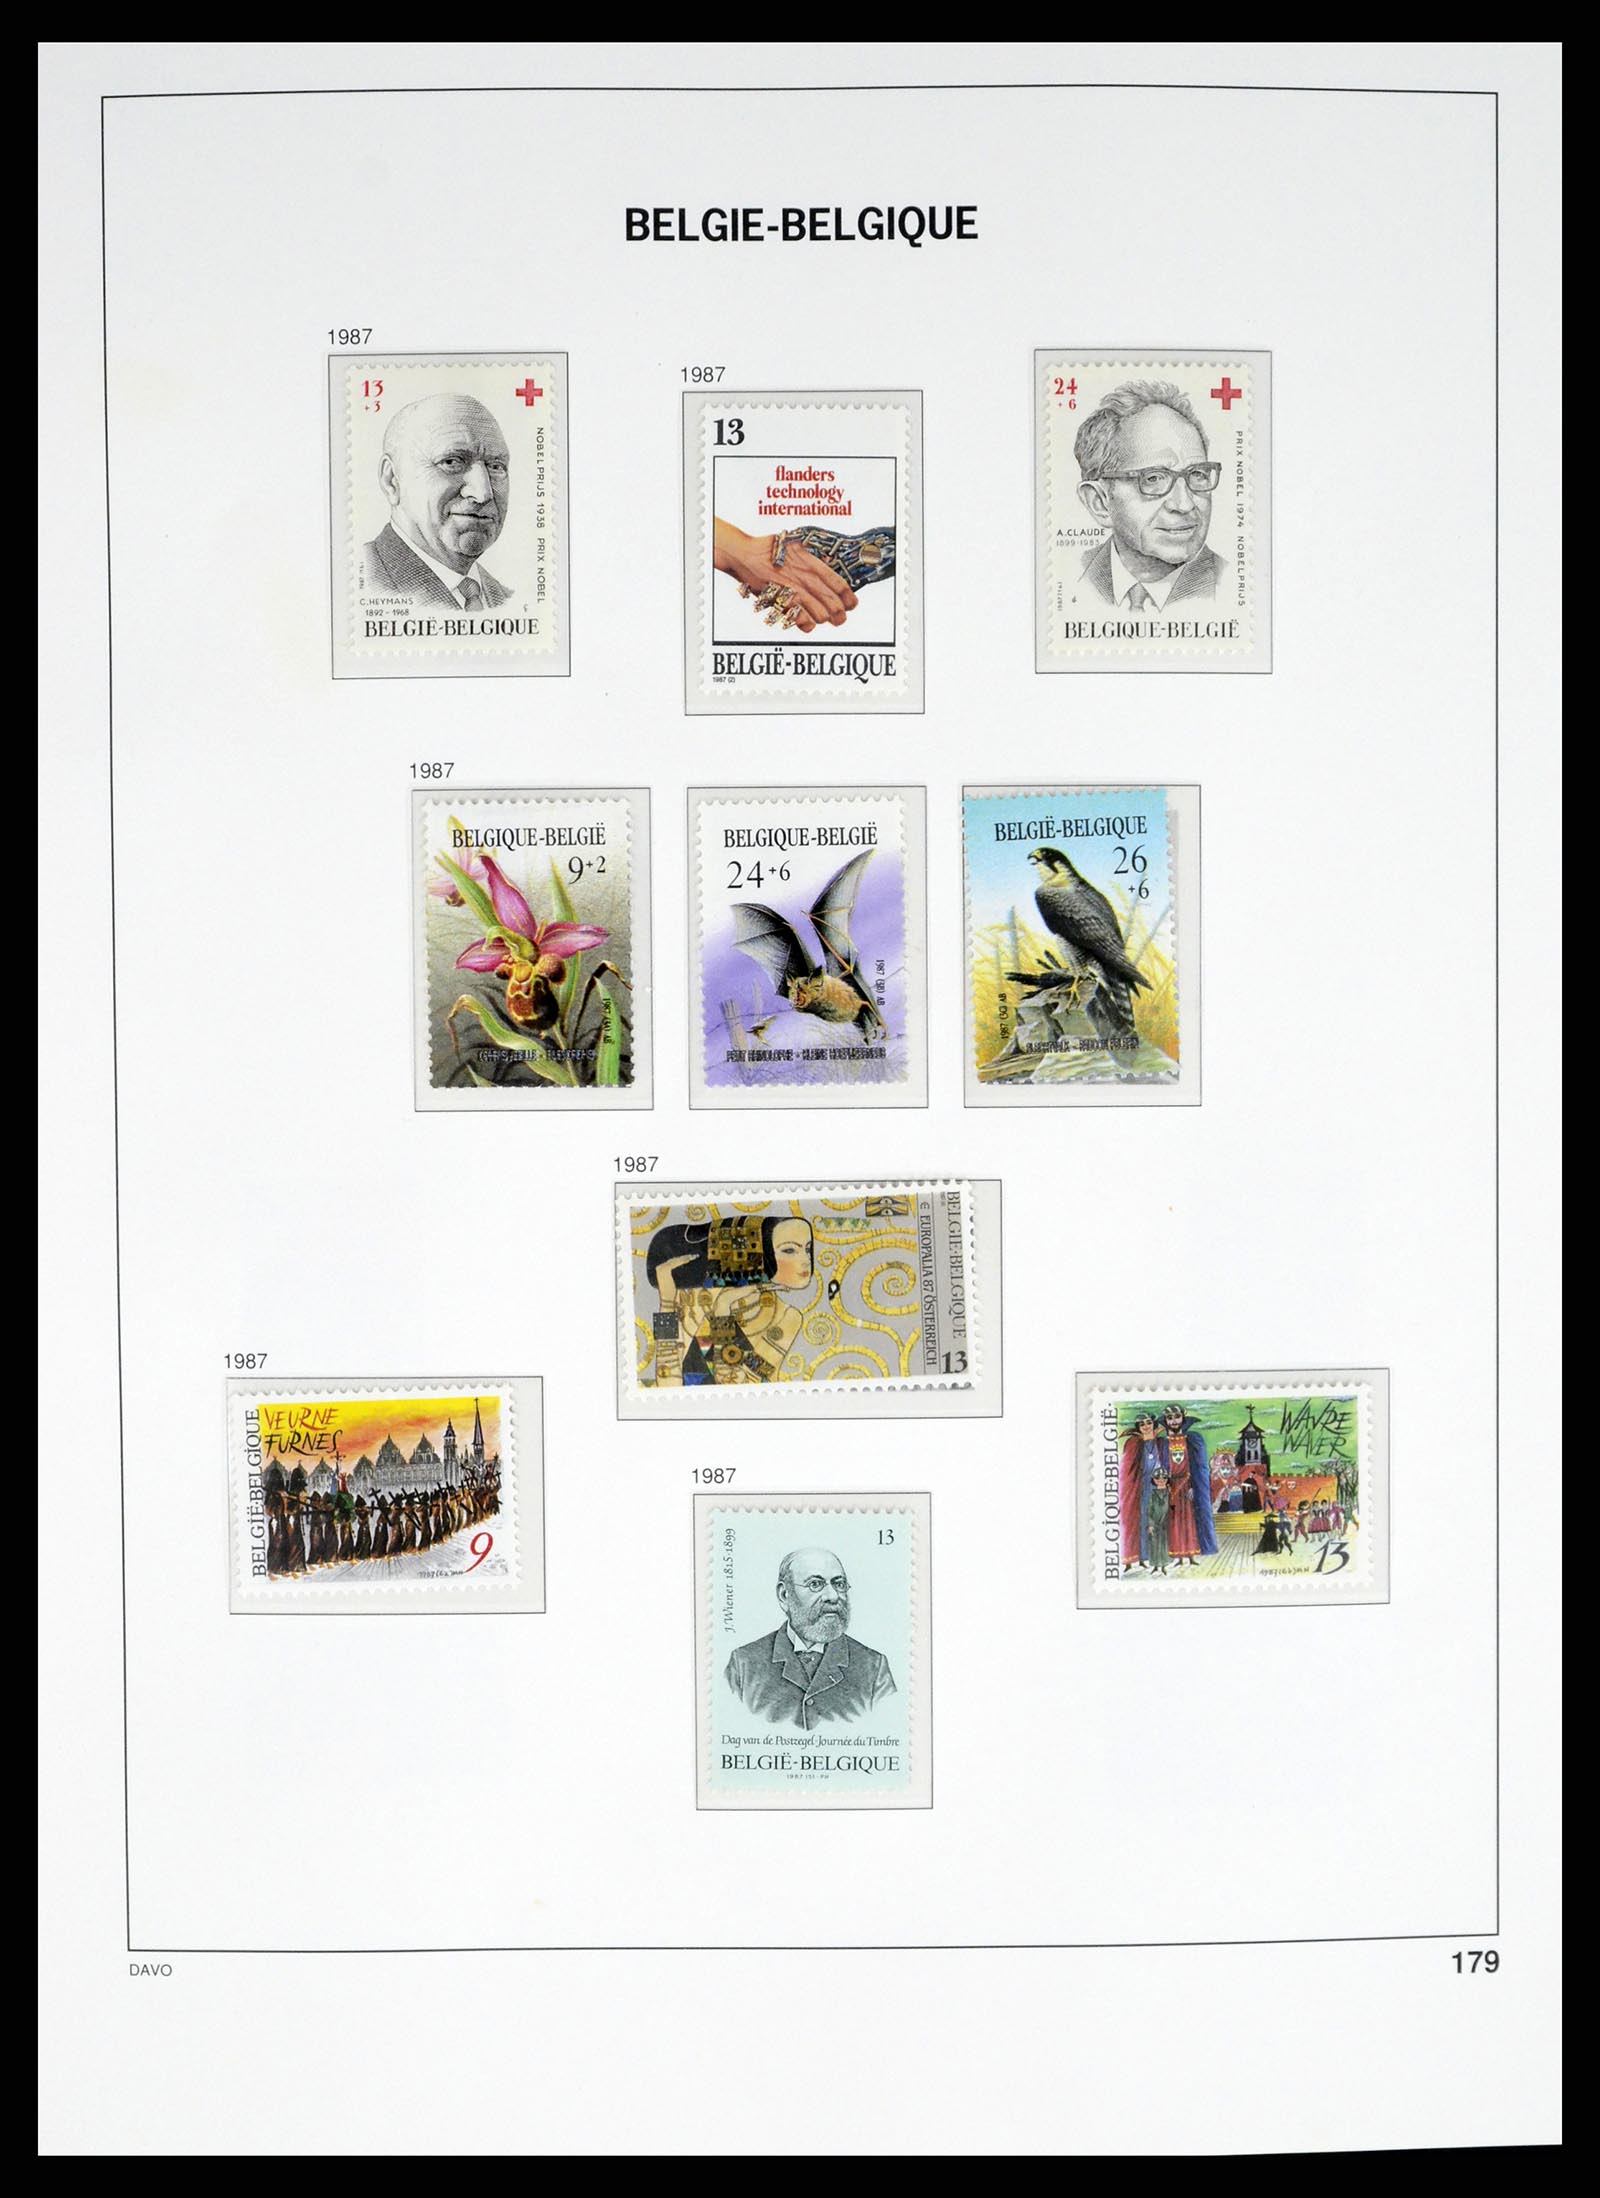 37368 080 - Stamp collection 37368 Belgium 1969-2003.